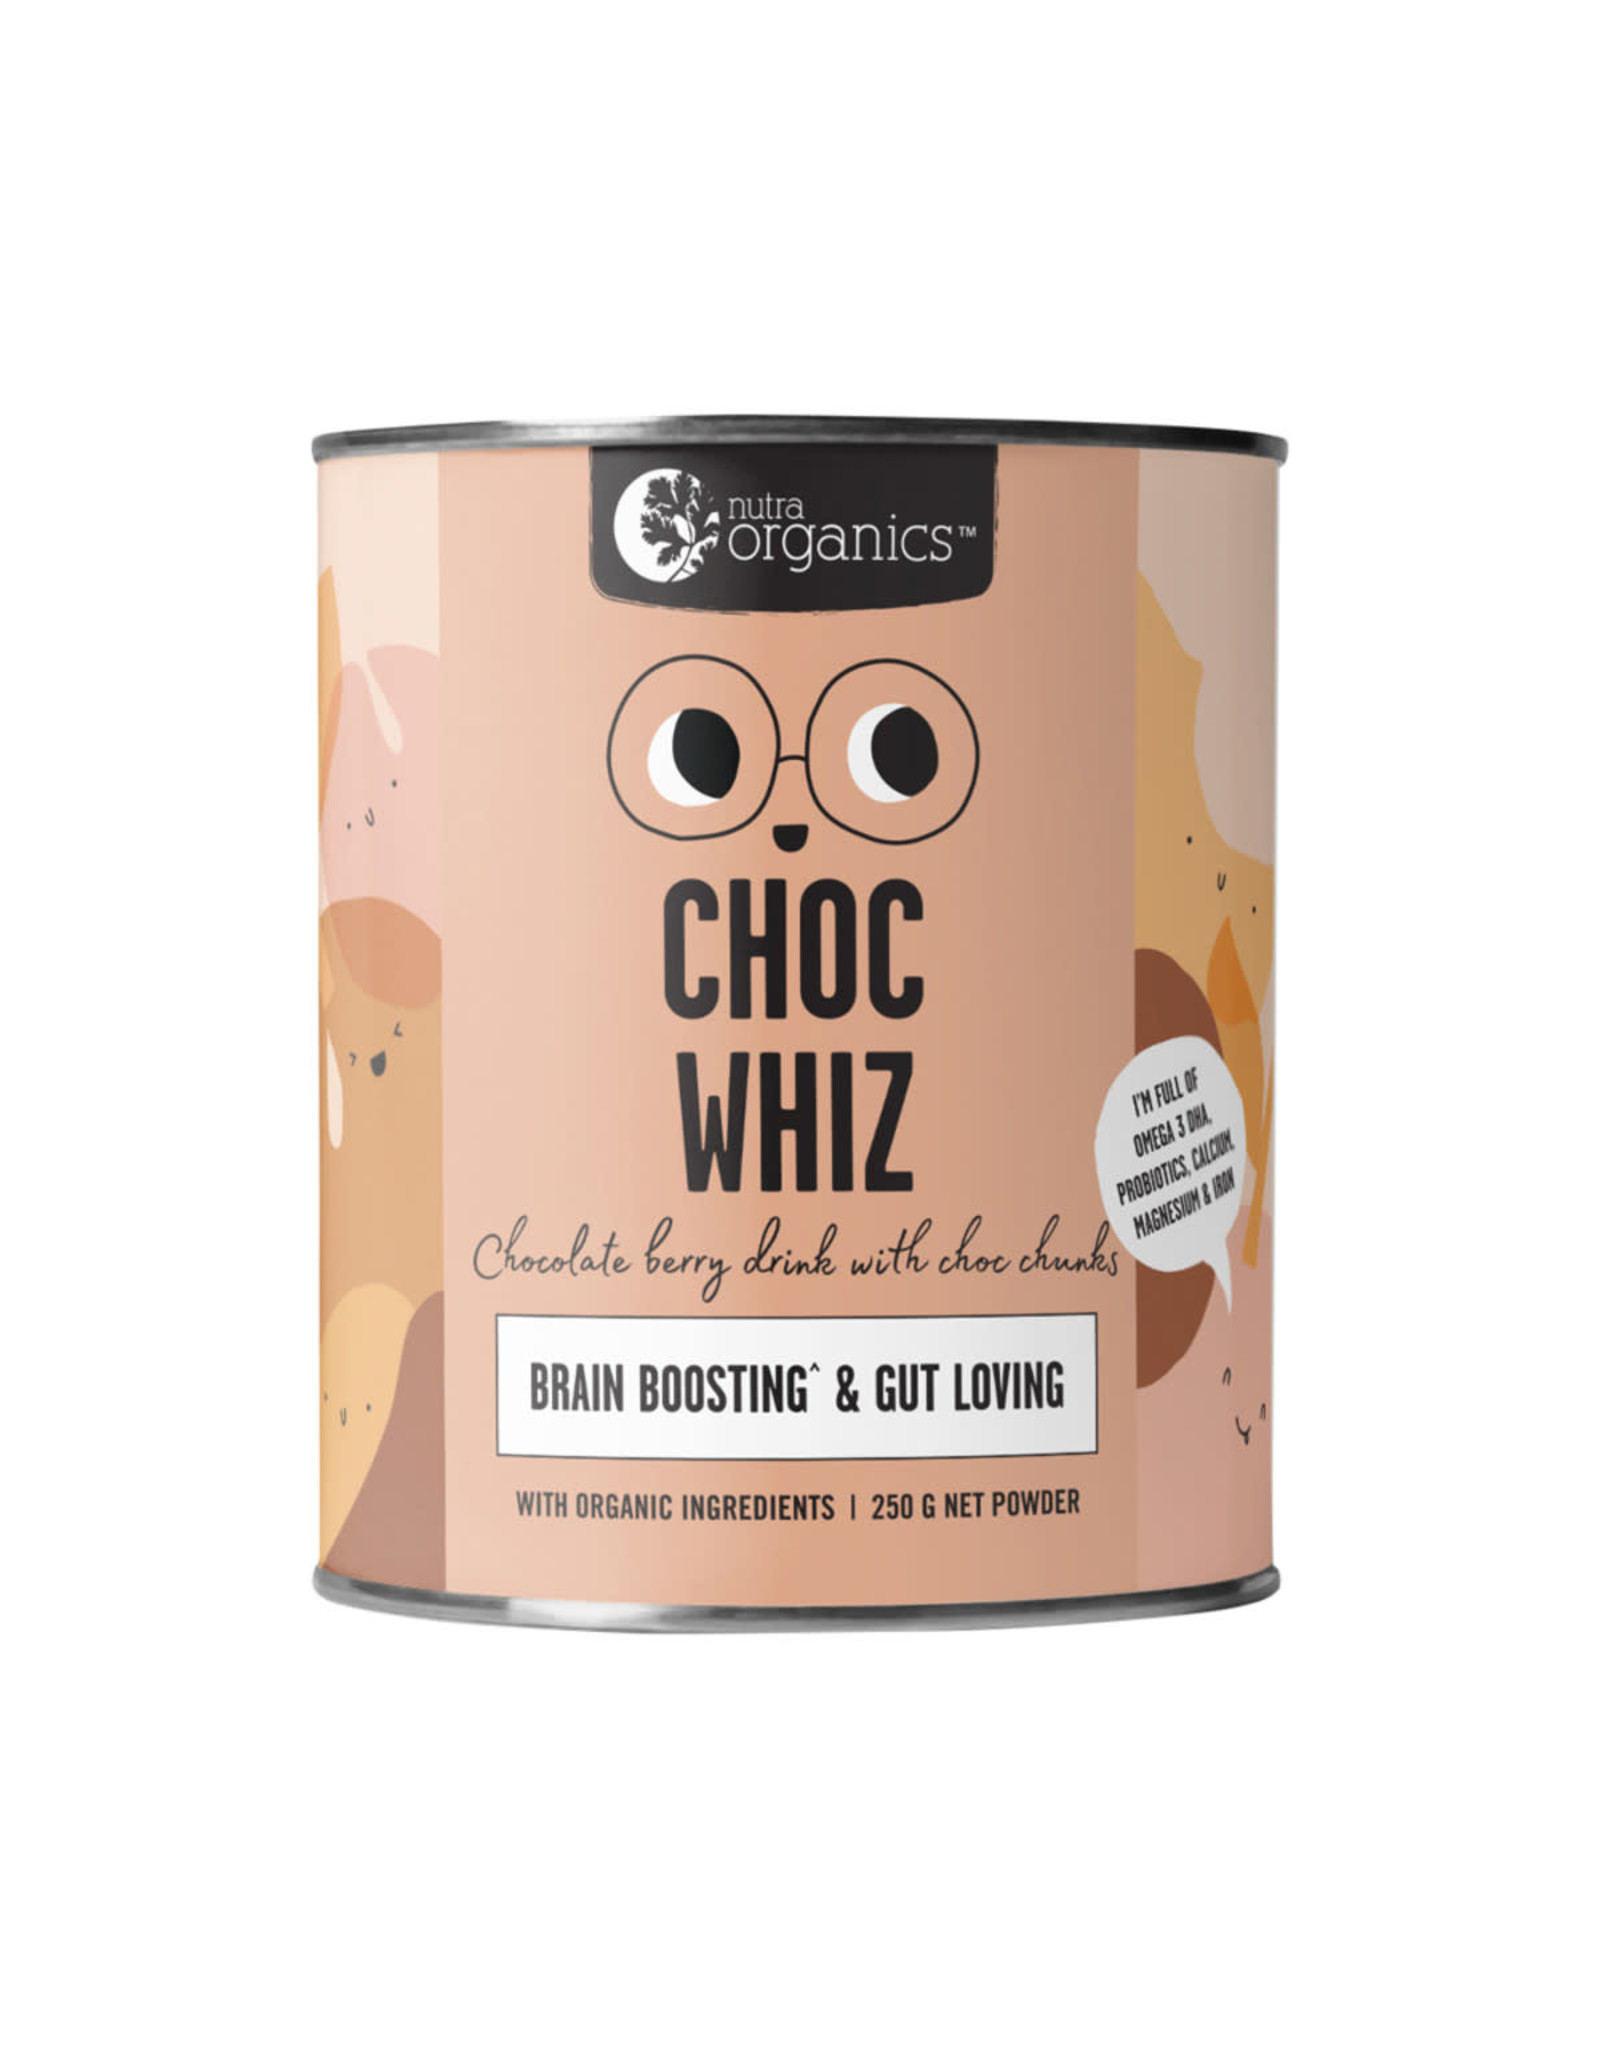 NutraOrganics Choc Whiz (Brain Boosting & Gut Loving) 250g